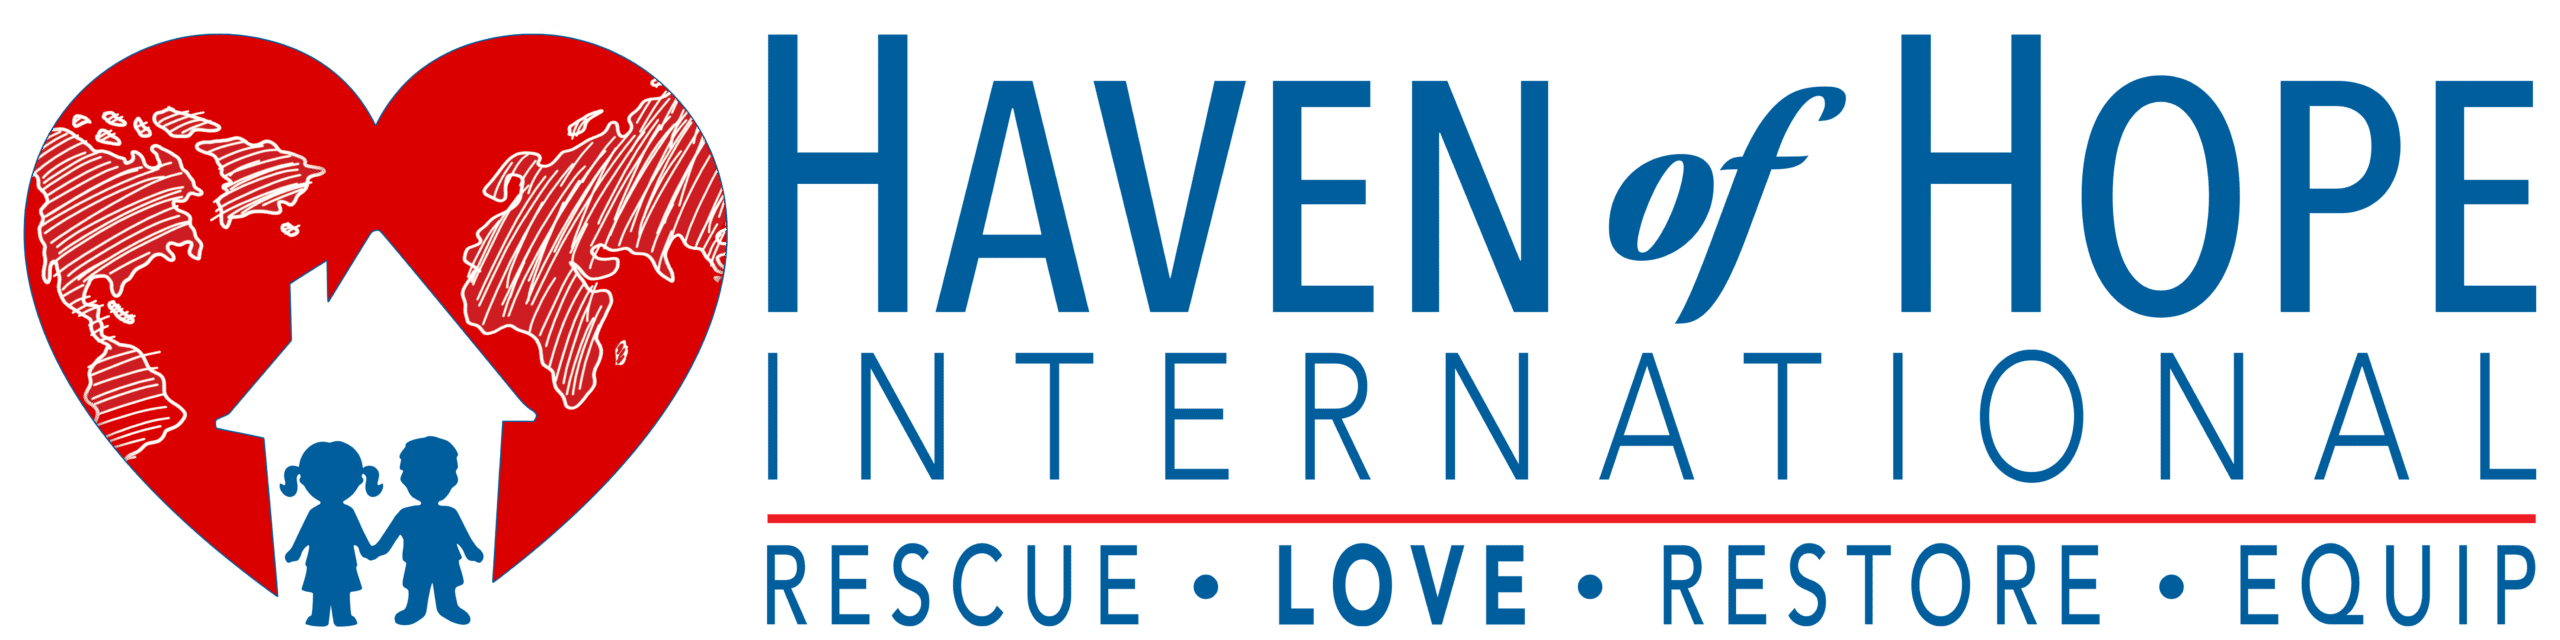 Haven of Hope International